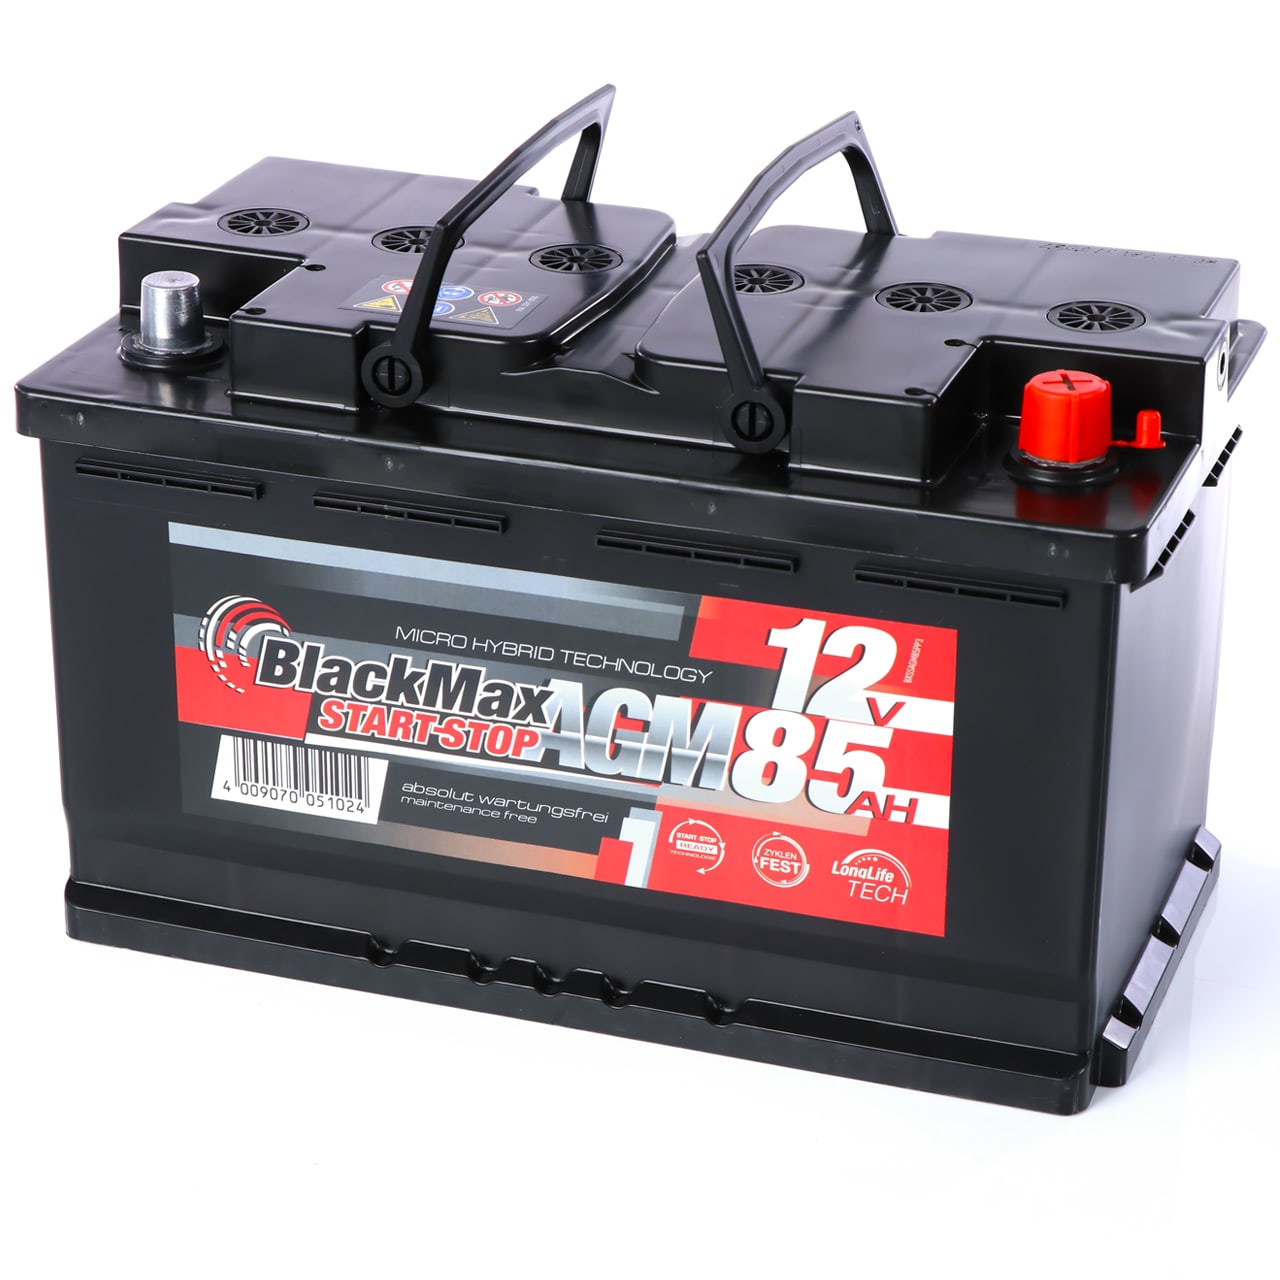 EXAKT US Autobatterie 85Ah 12V, 112,90 €